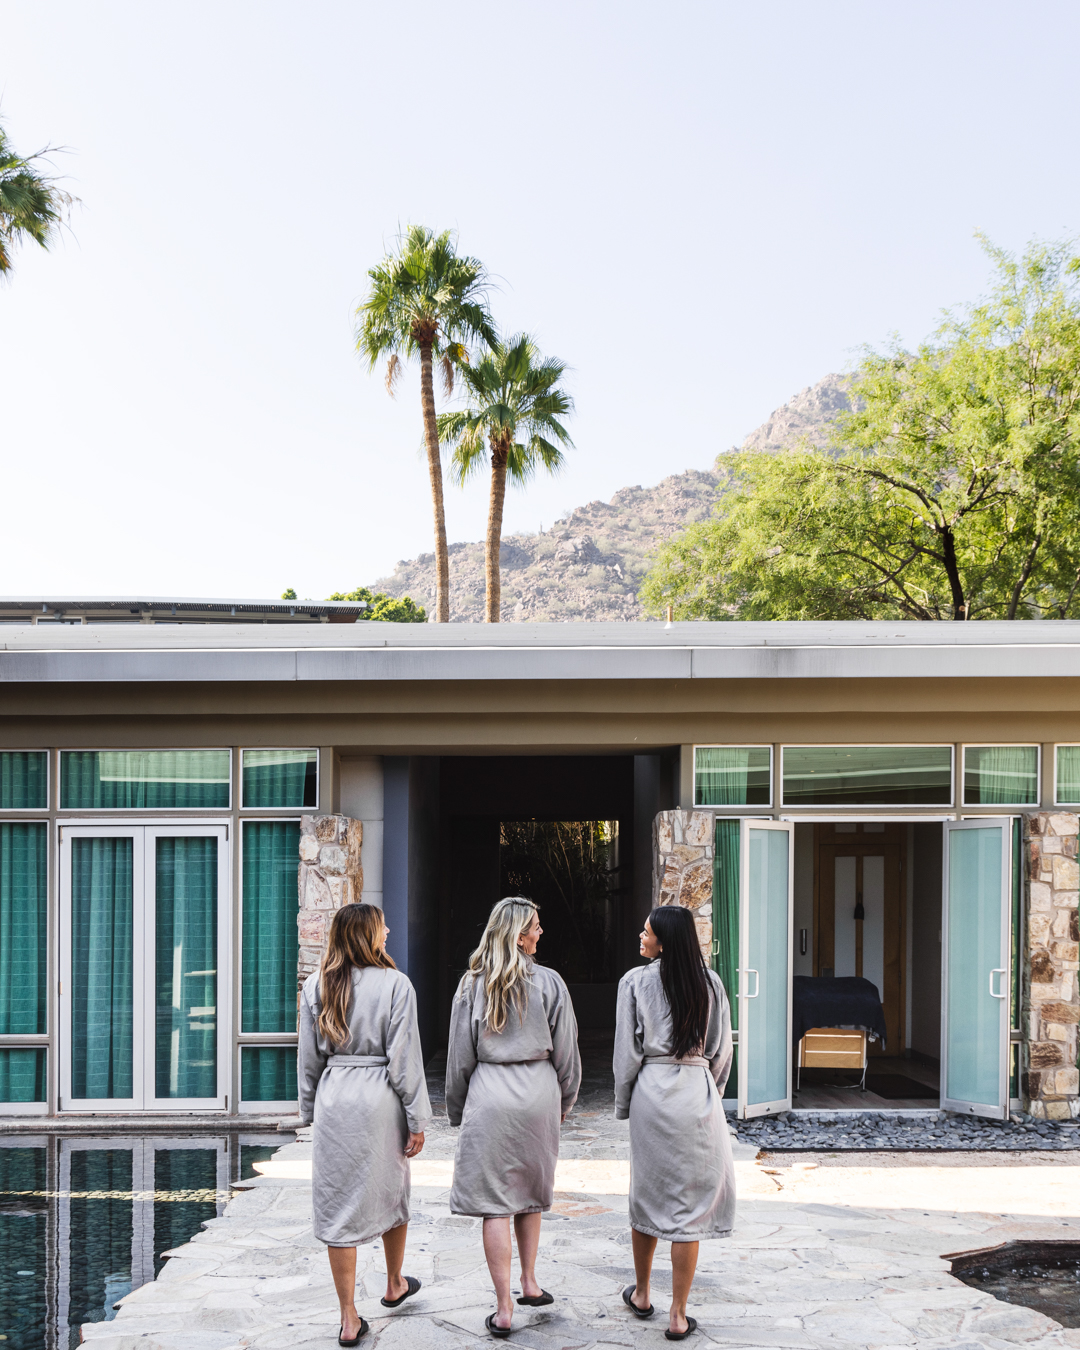 Three woman in spa robes walking through Sanctuary Spa's Zen Garden courtyard before treatments.